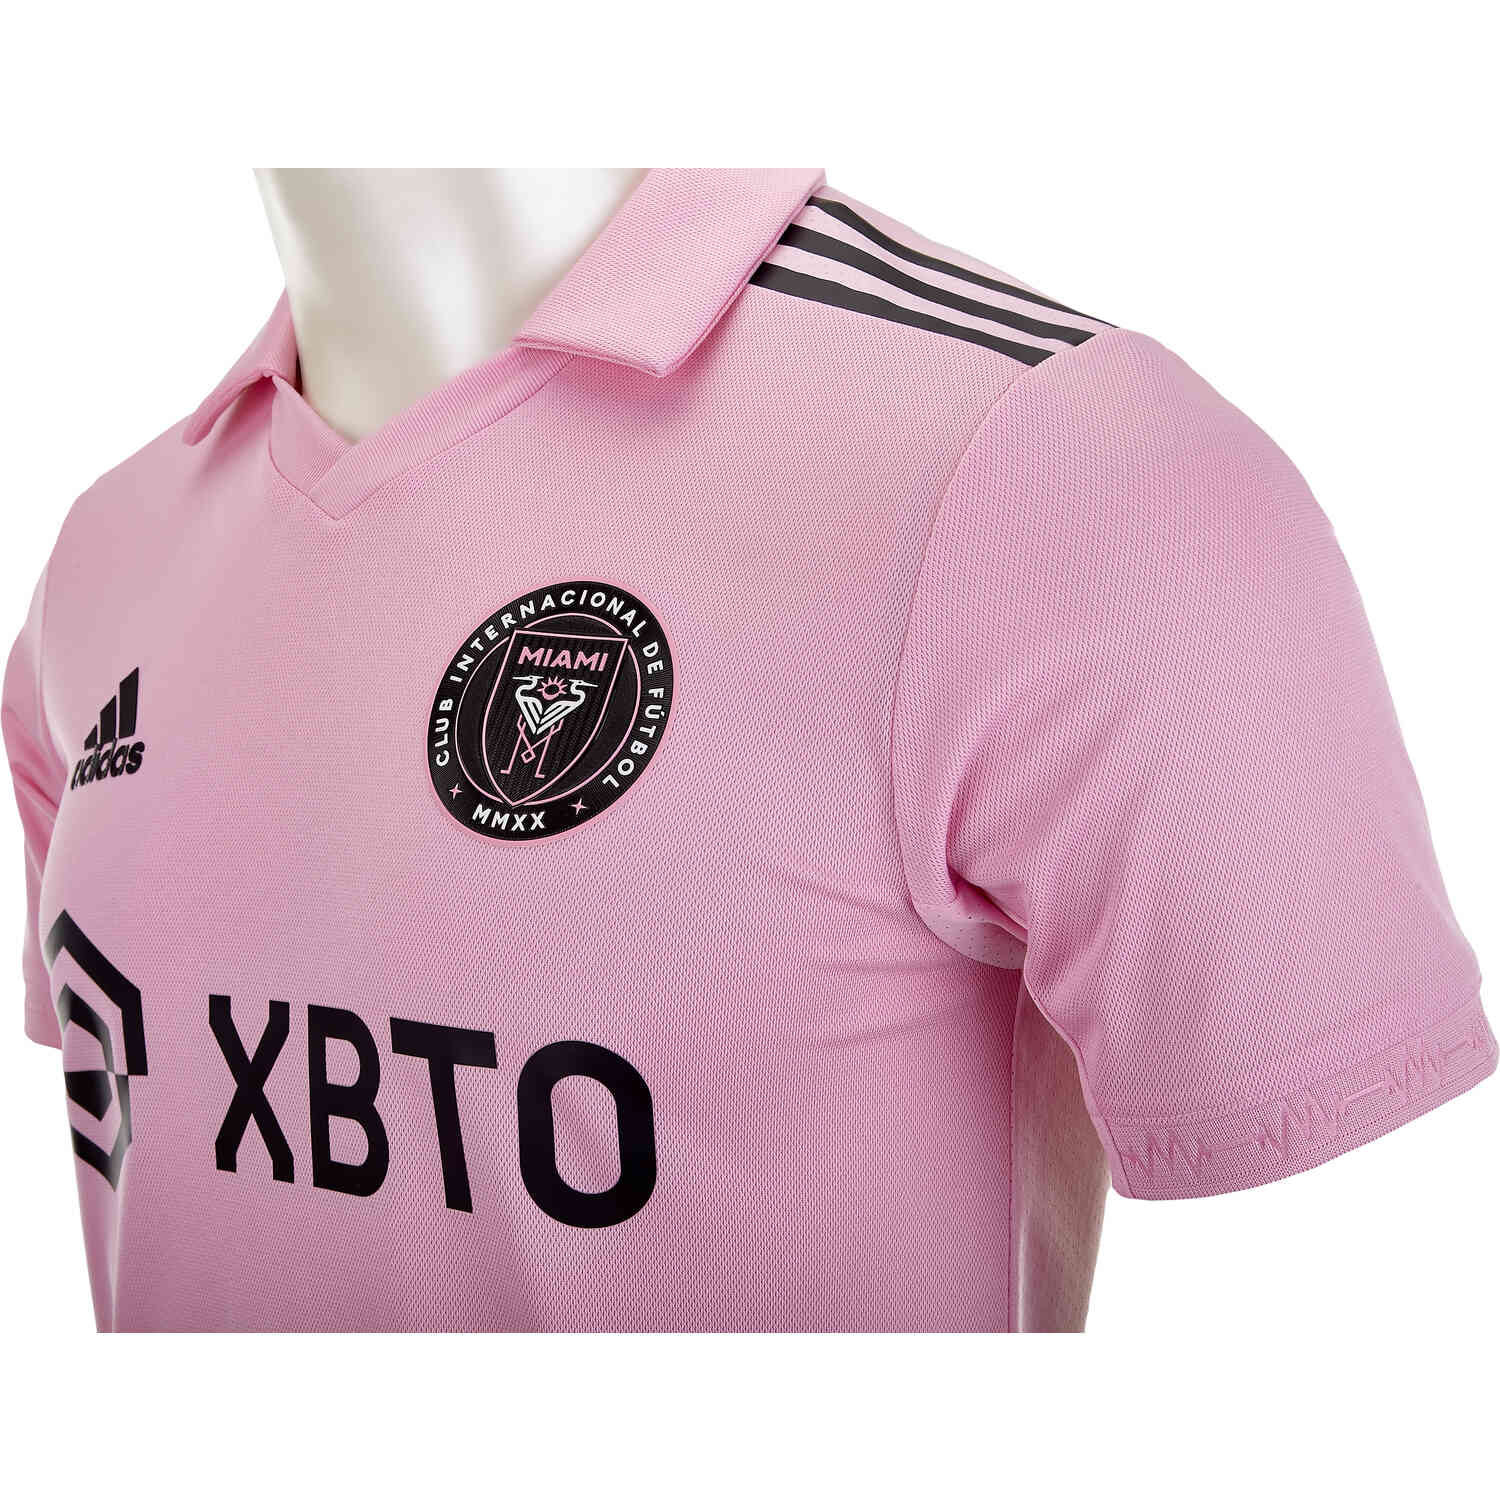 2023 adidas Inter Miami Home Match Jersey - True Pink/Black